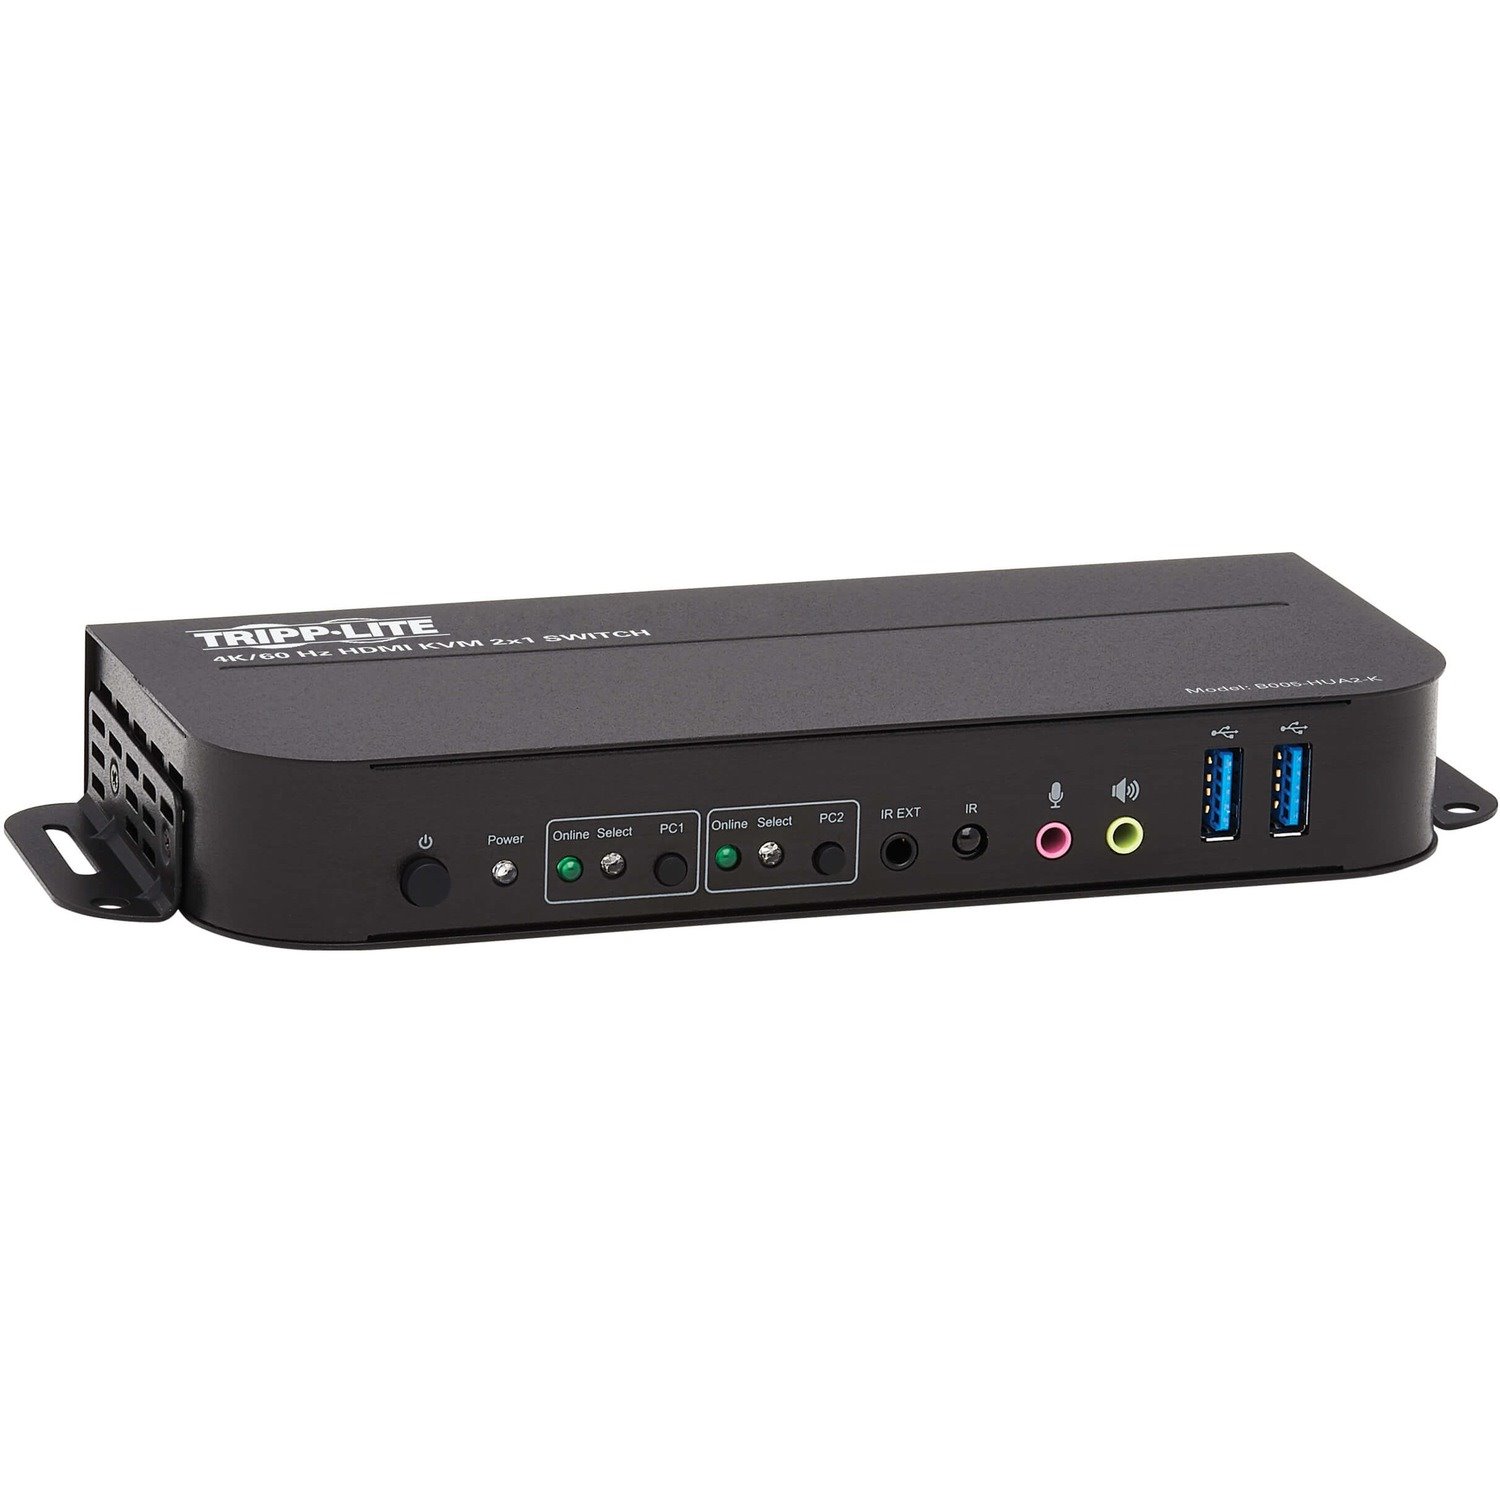 Eaton Tripp Lite Series 2-Port HDMI/USB KVM Switch - 4K 60 Hz, HDR, HDCP 2.2, IR, USB Sharing, USB 3.0 Cables